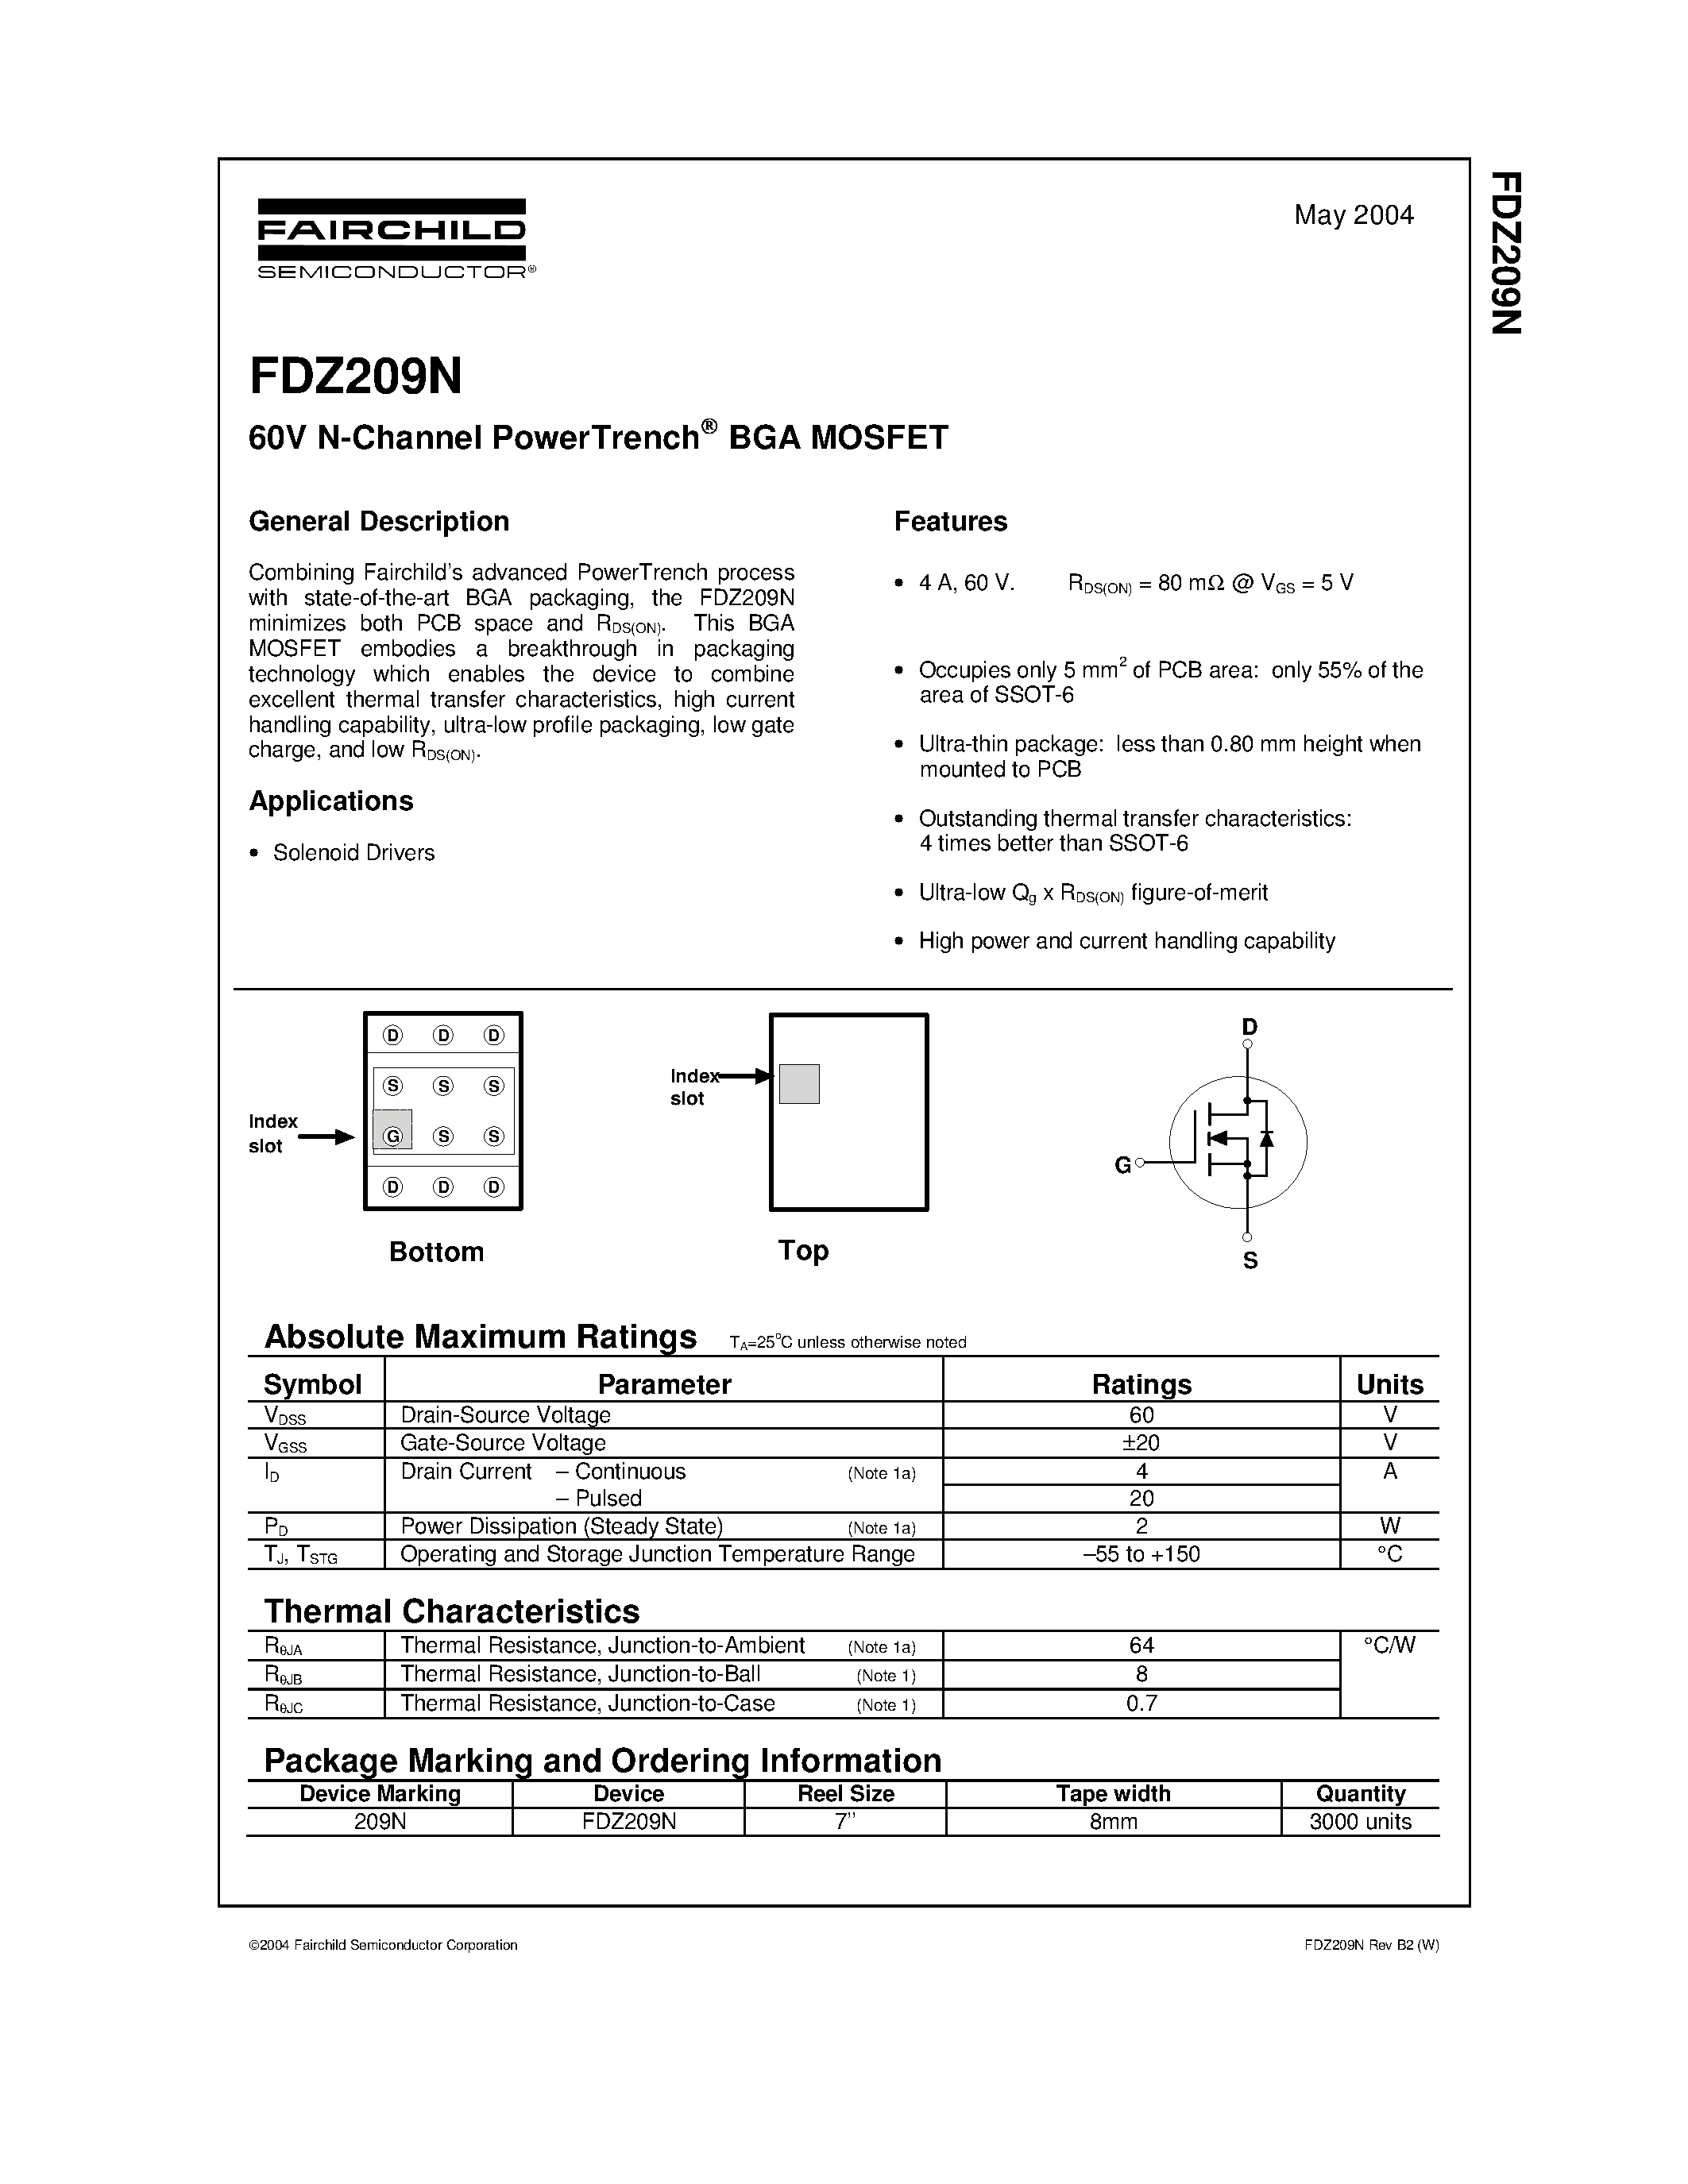 Datasheet FDZ209N - 60V N-Channel PowerTrench BGA MOSFET page 1